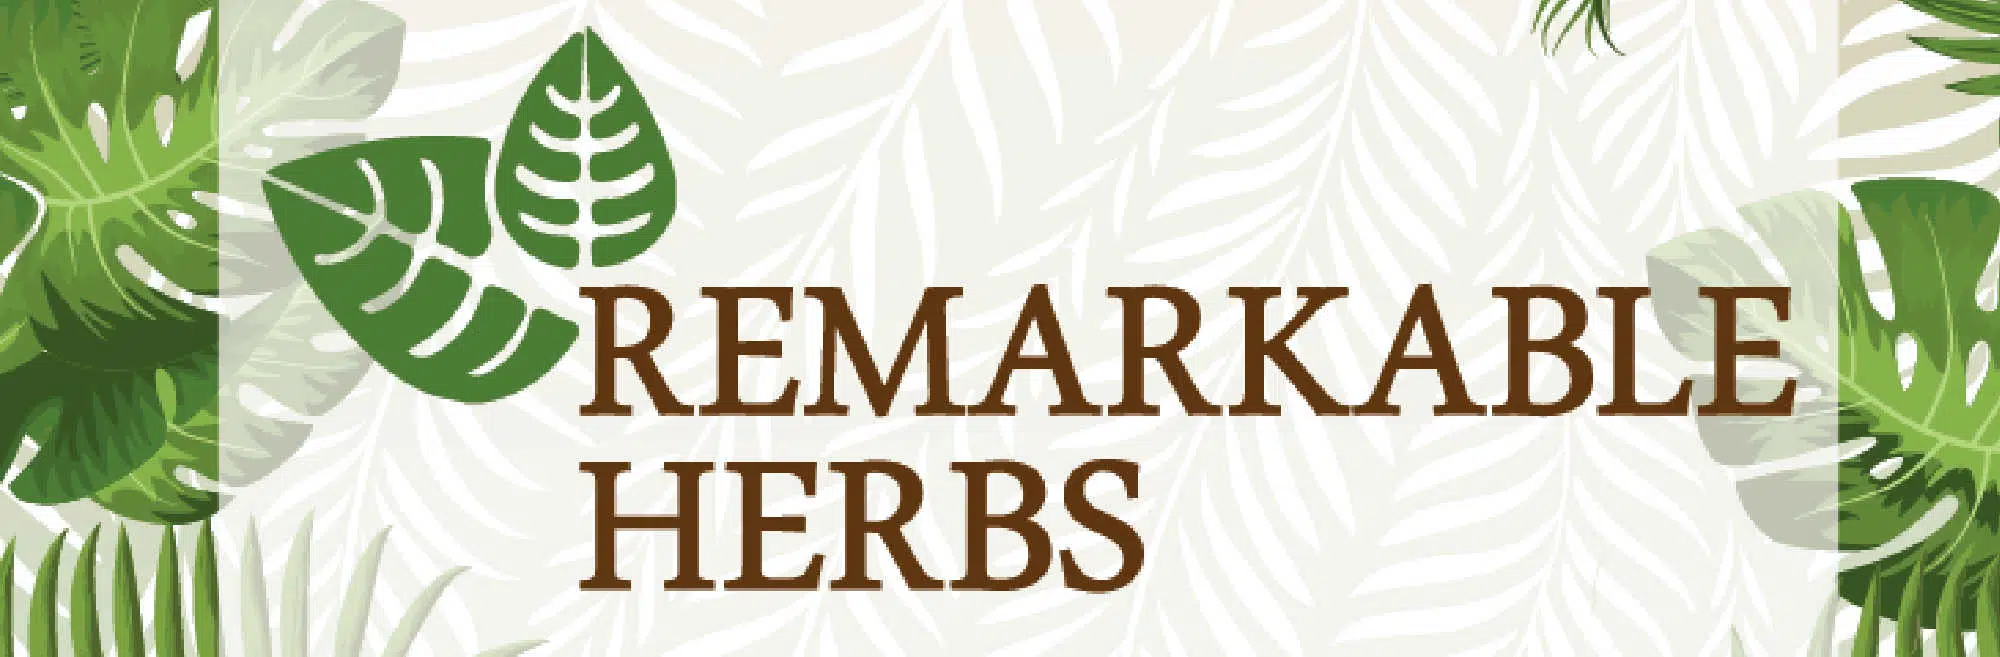 remarkable herbs banner logo